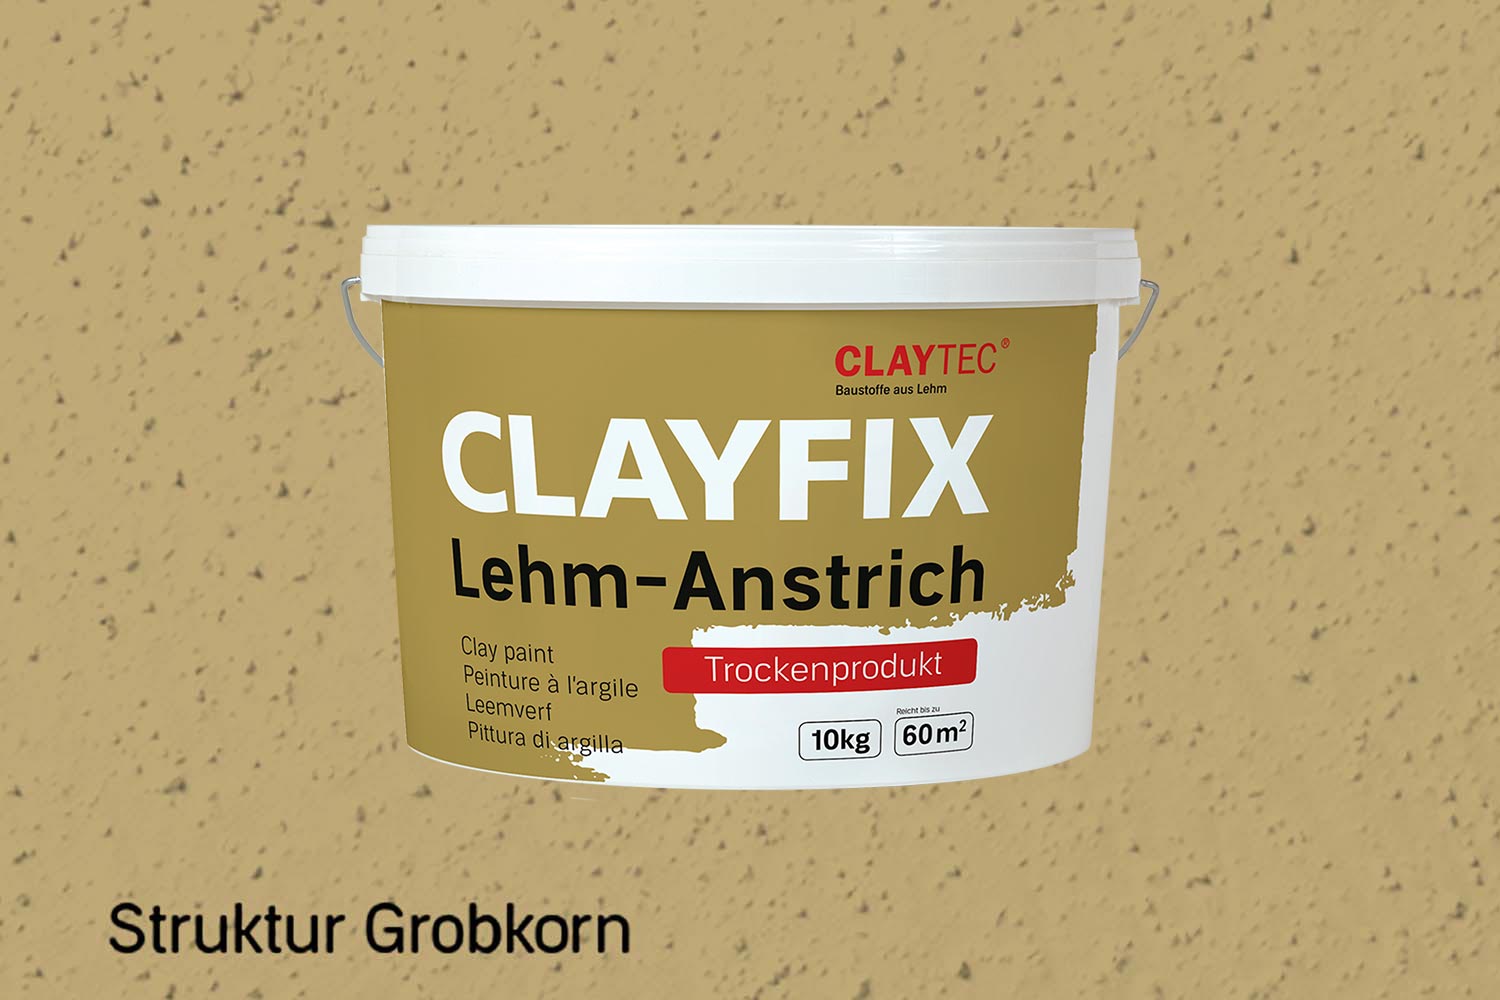 Claytec Clayfix Lehm-Anstrich Grobkorn